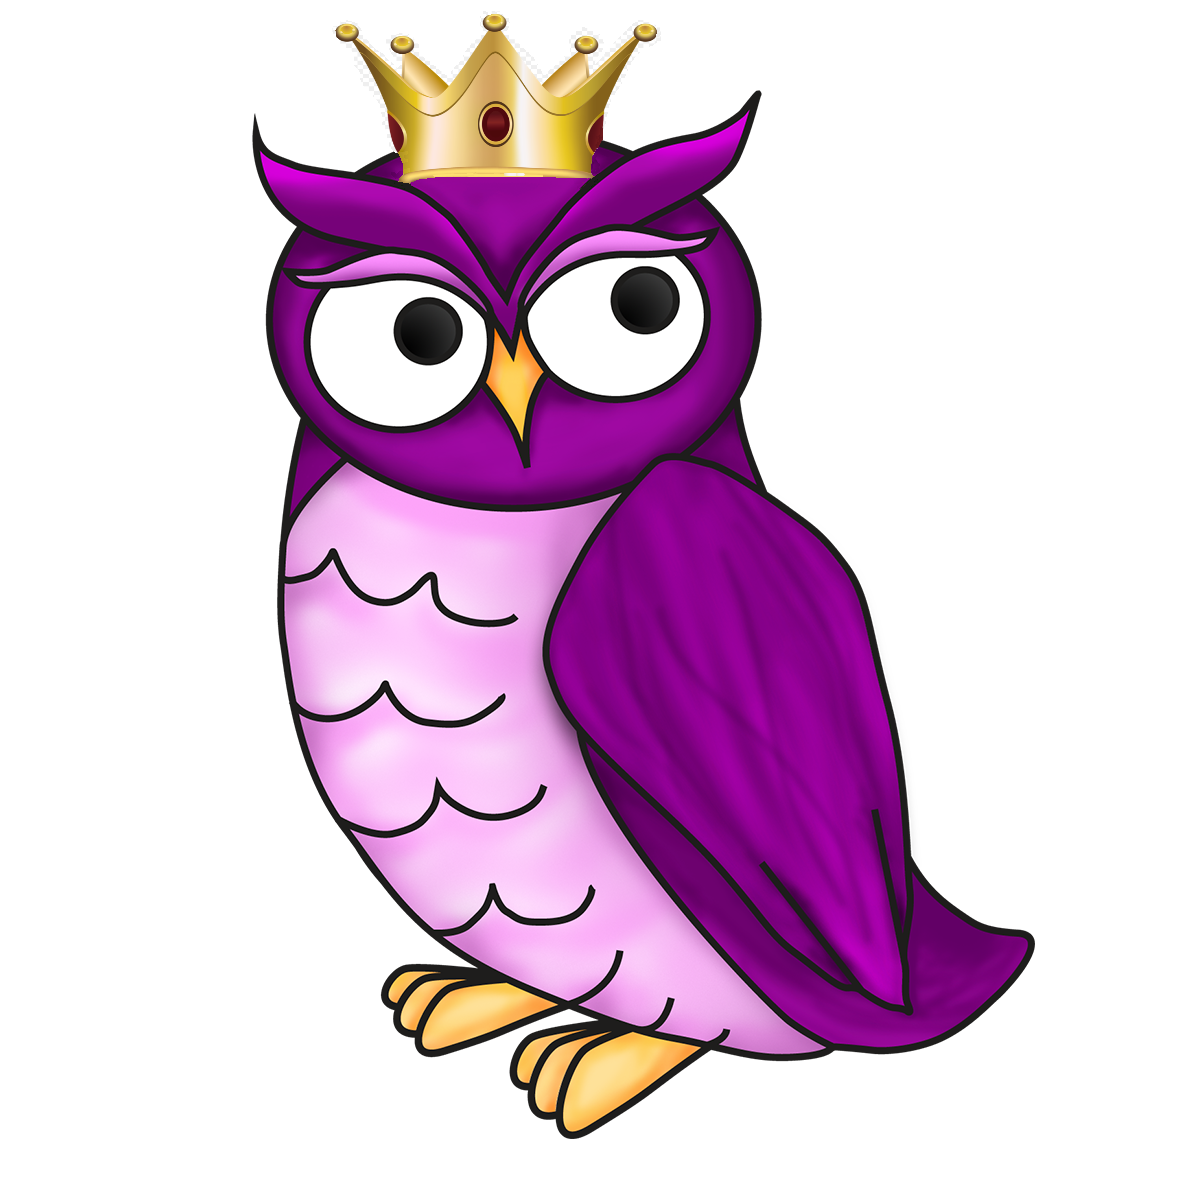 An owl wearing a crown.